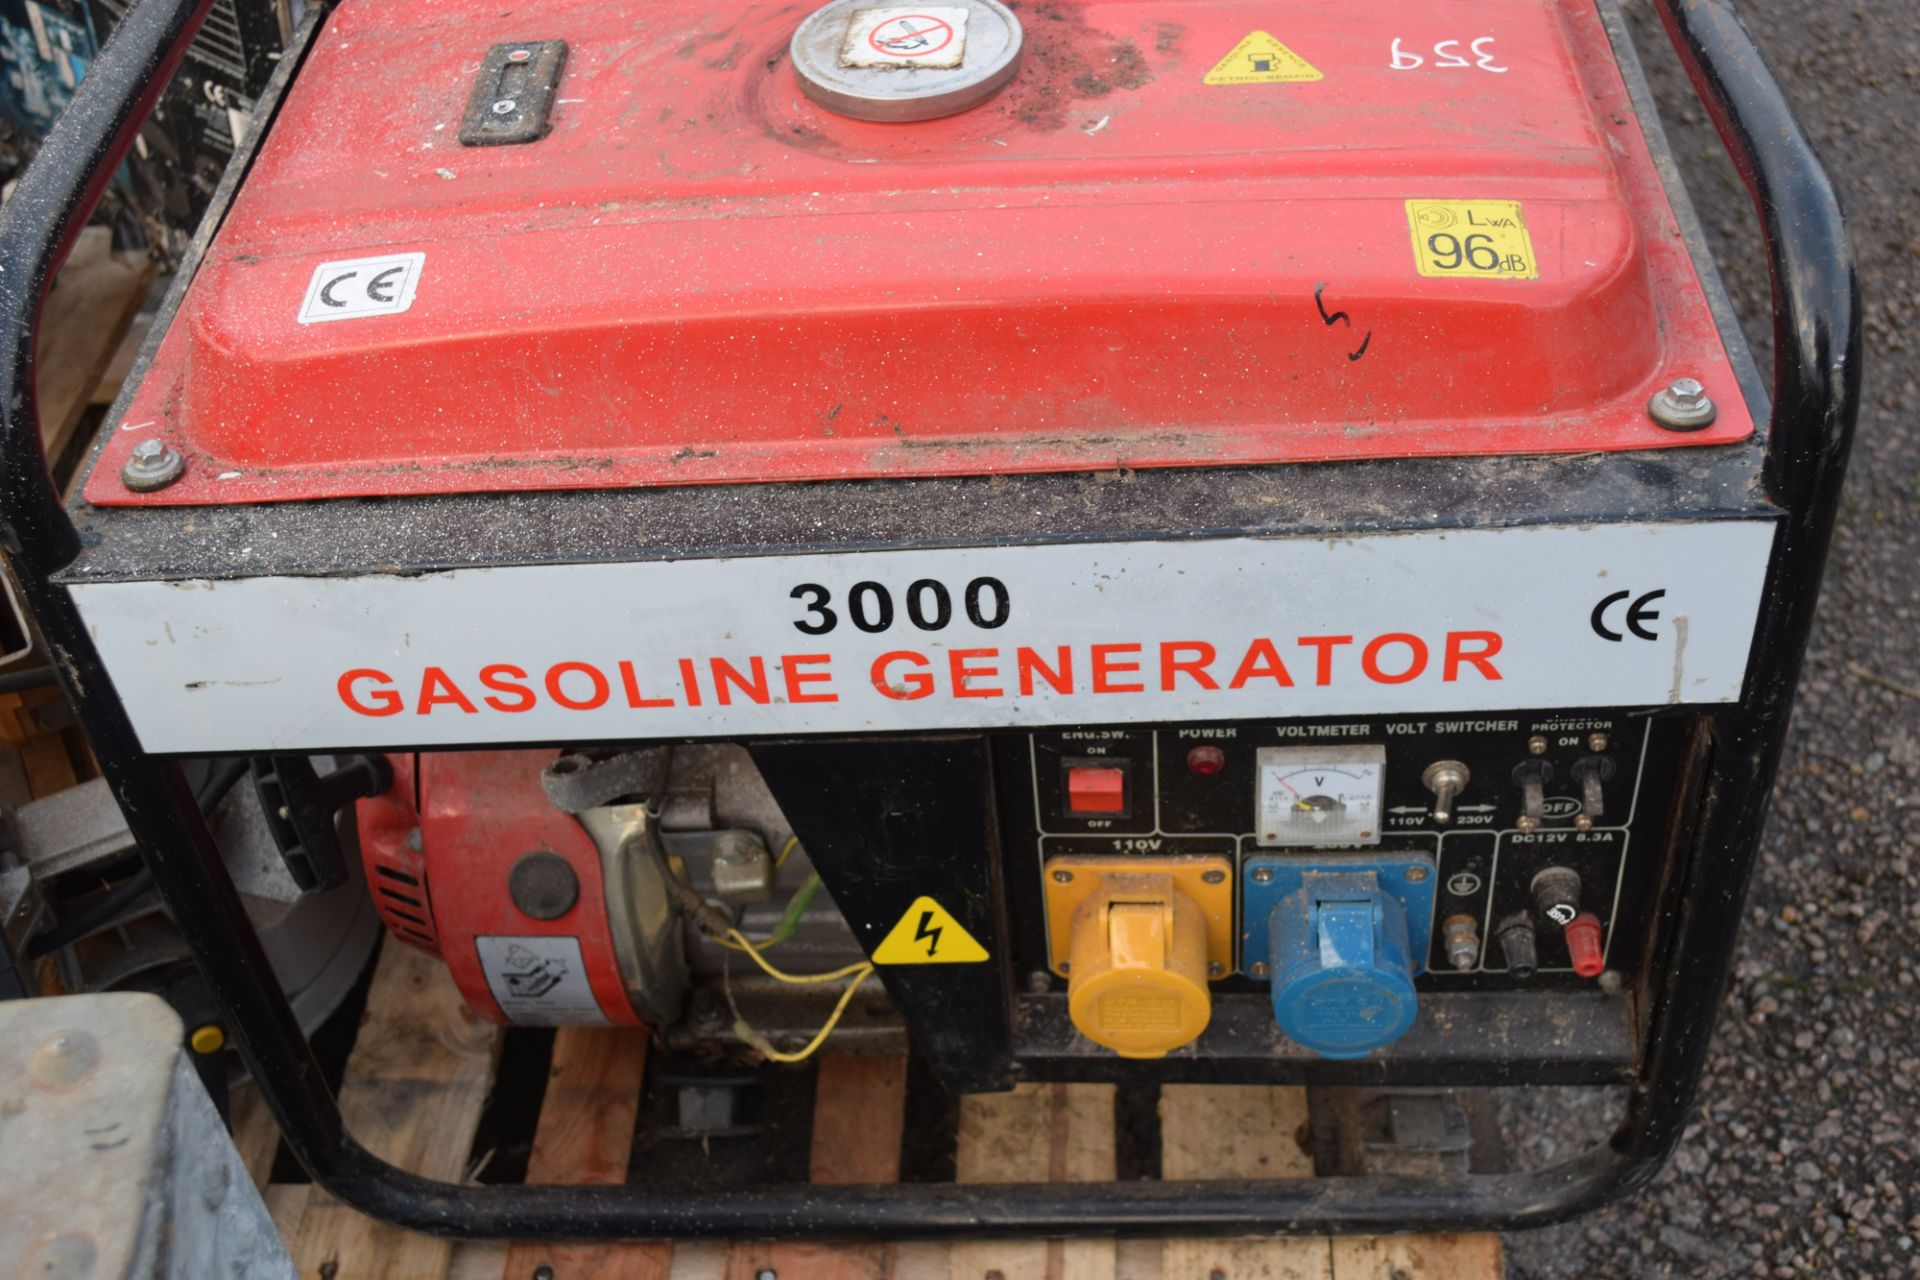 3000 gasoline generator - Image 2 of 2